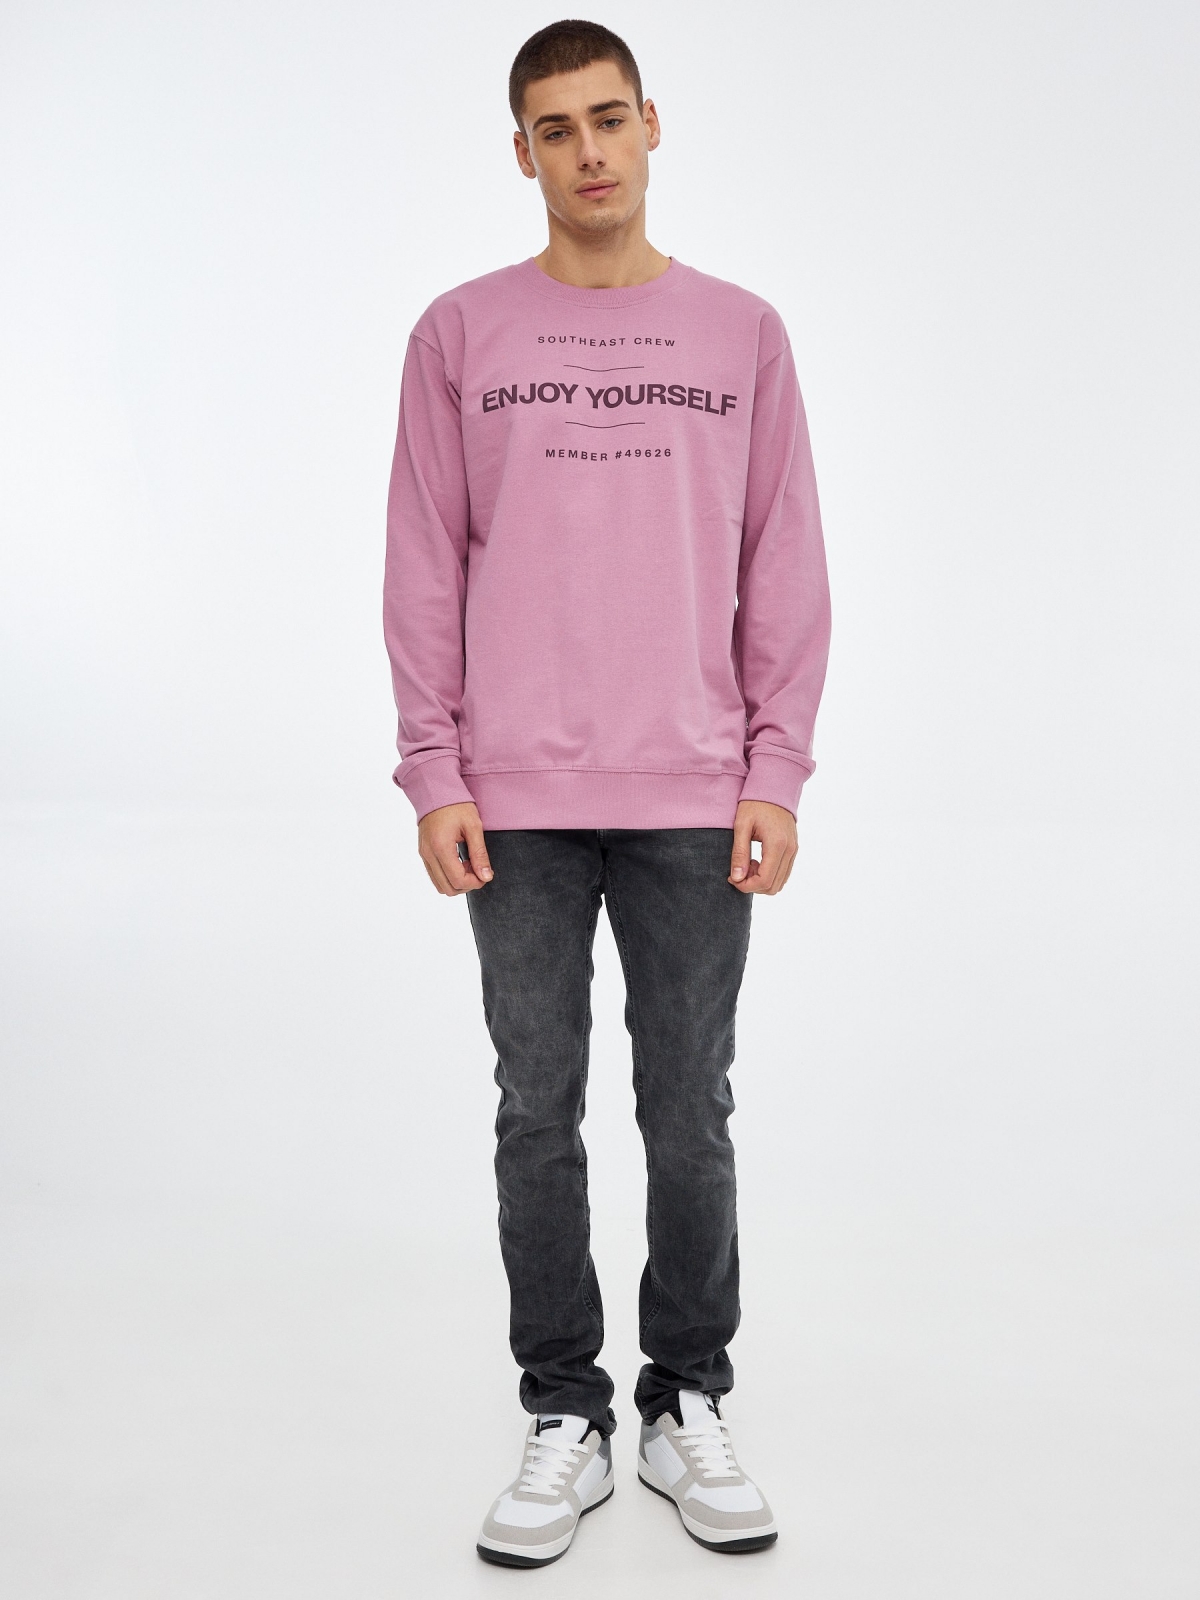 Enjoy Yourself basic Sweatshirt pink front view